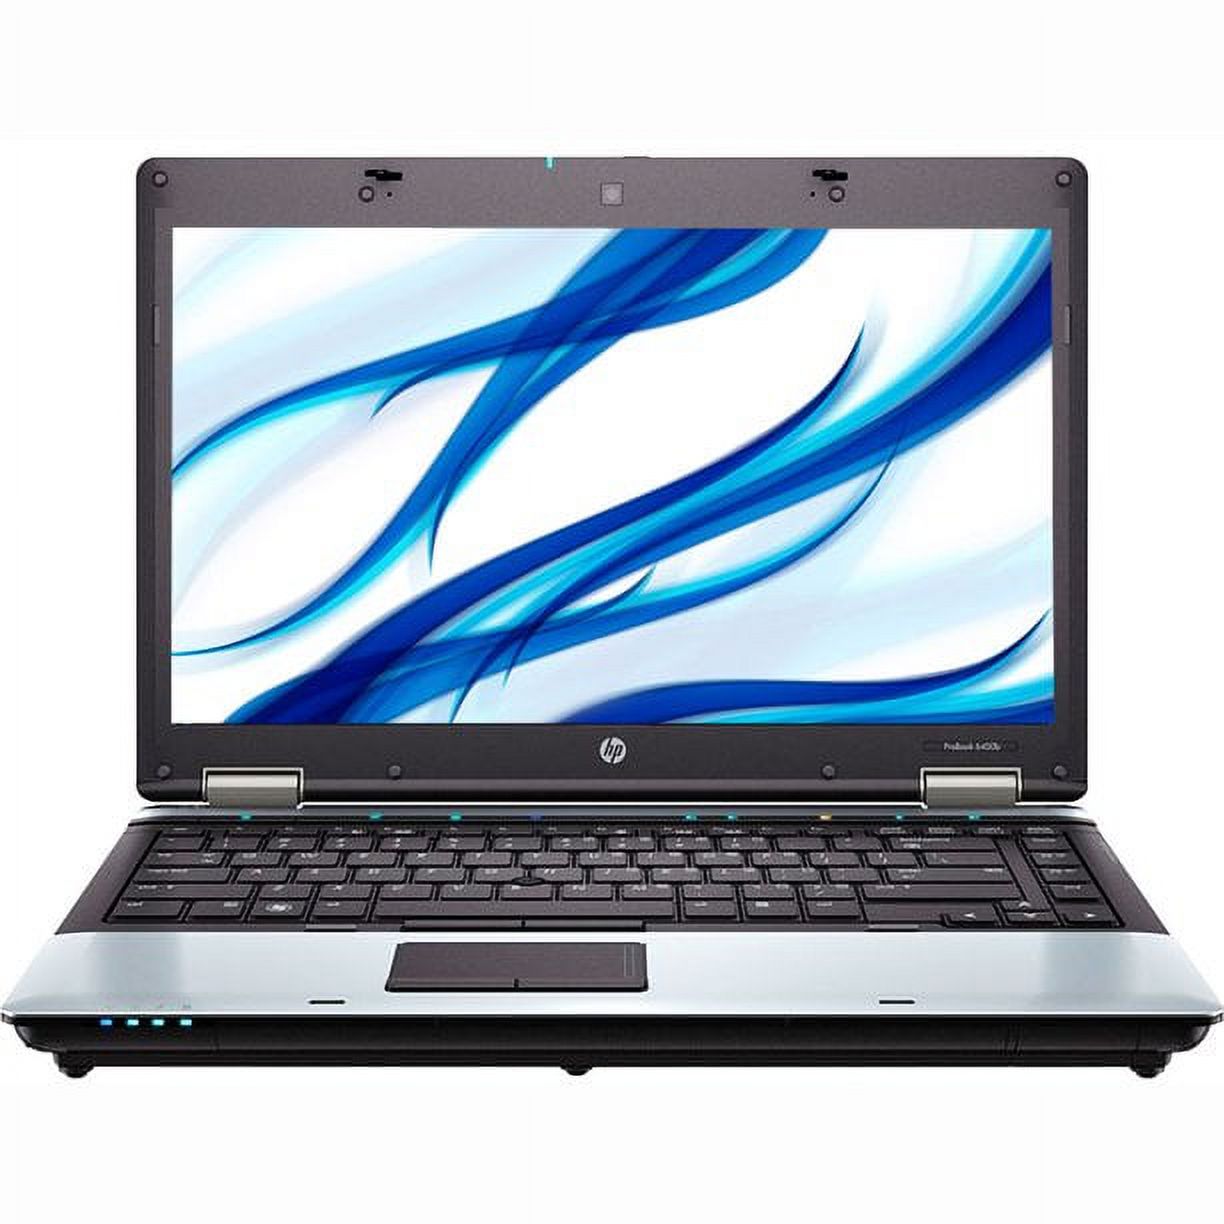 HP ProBook 6450b Laptop- 320GB HDD, 8GB RAM, i5-520M CPU, Windows 10 - Used - image 1 of 4